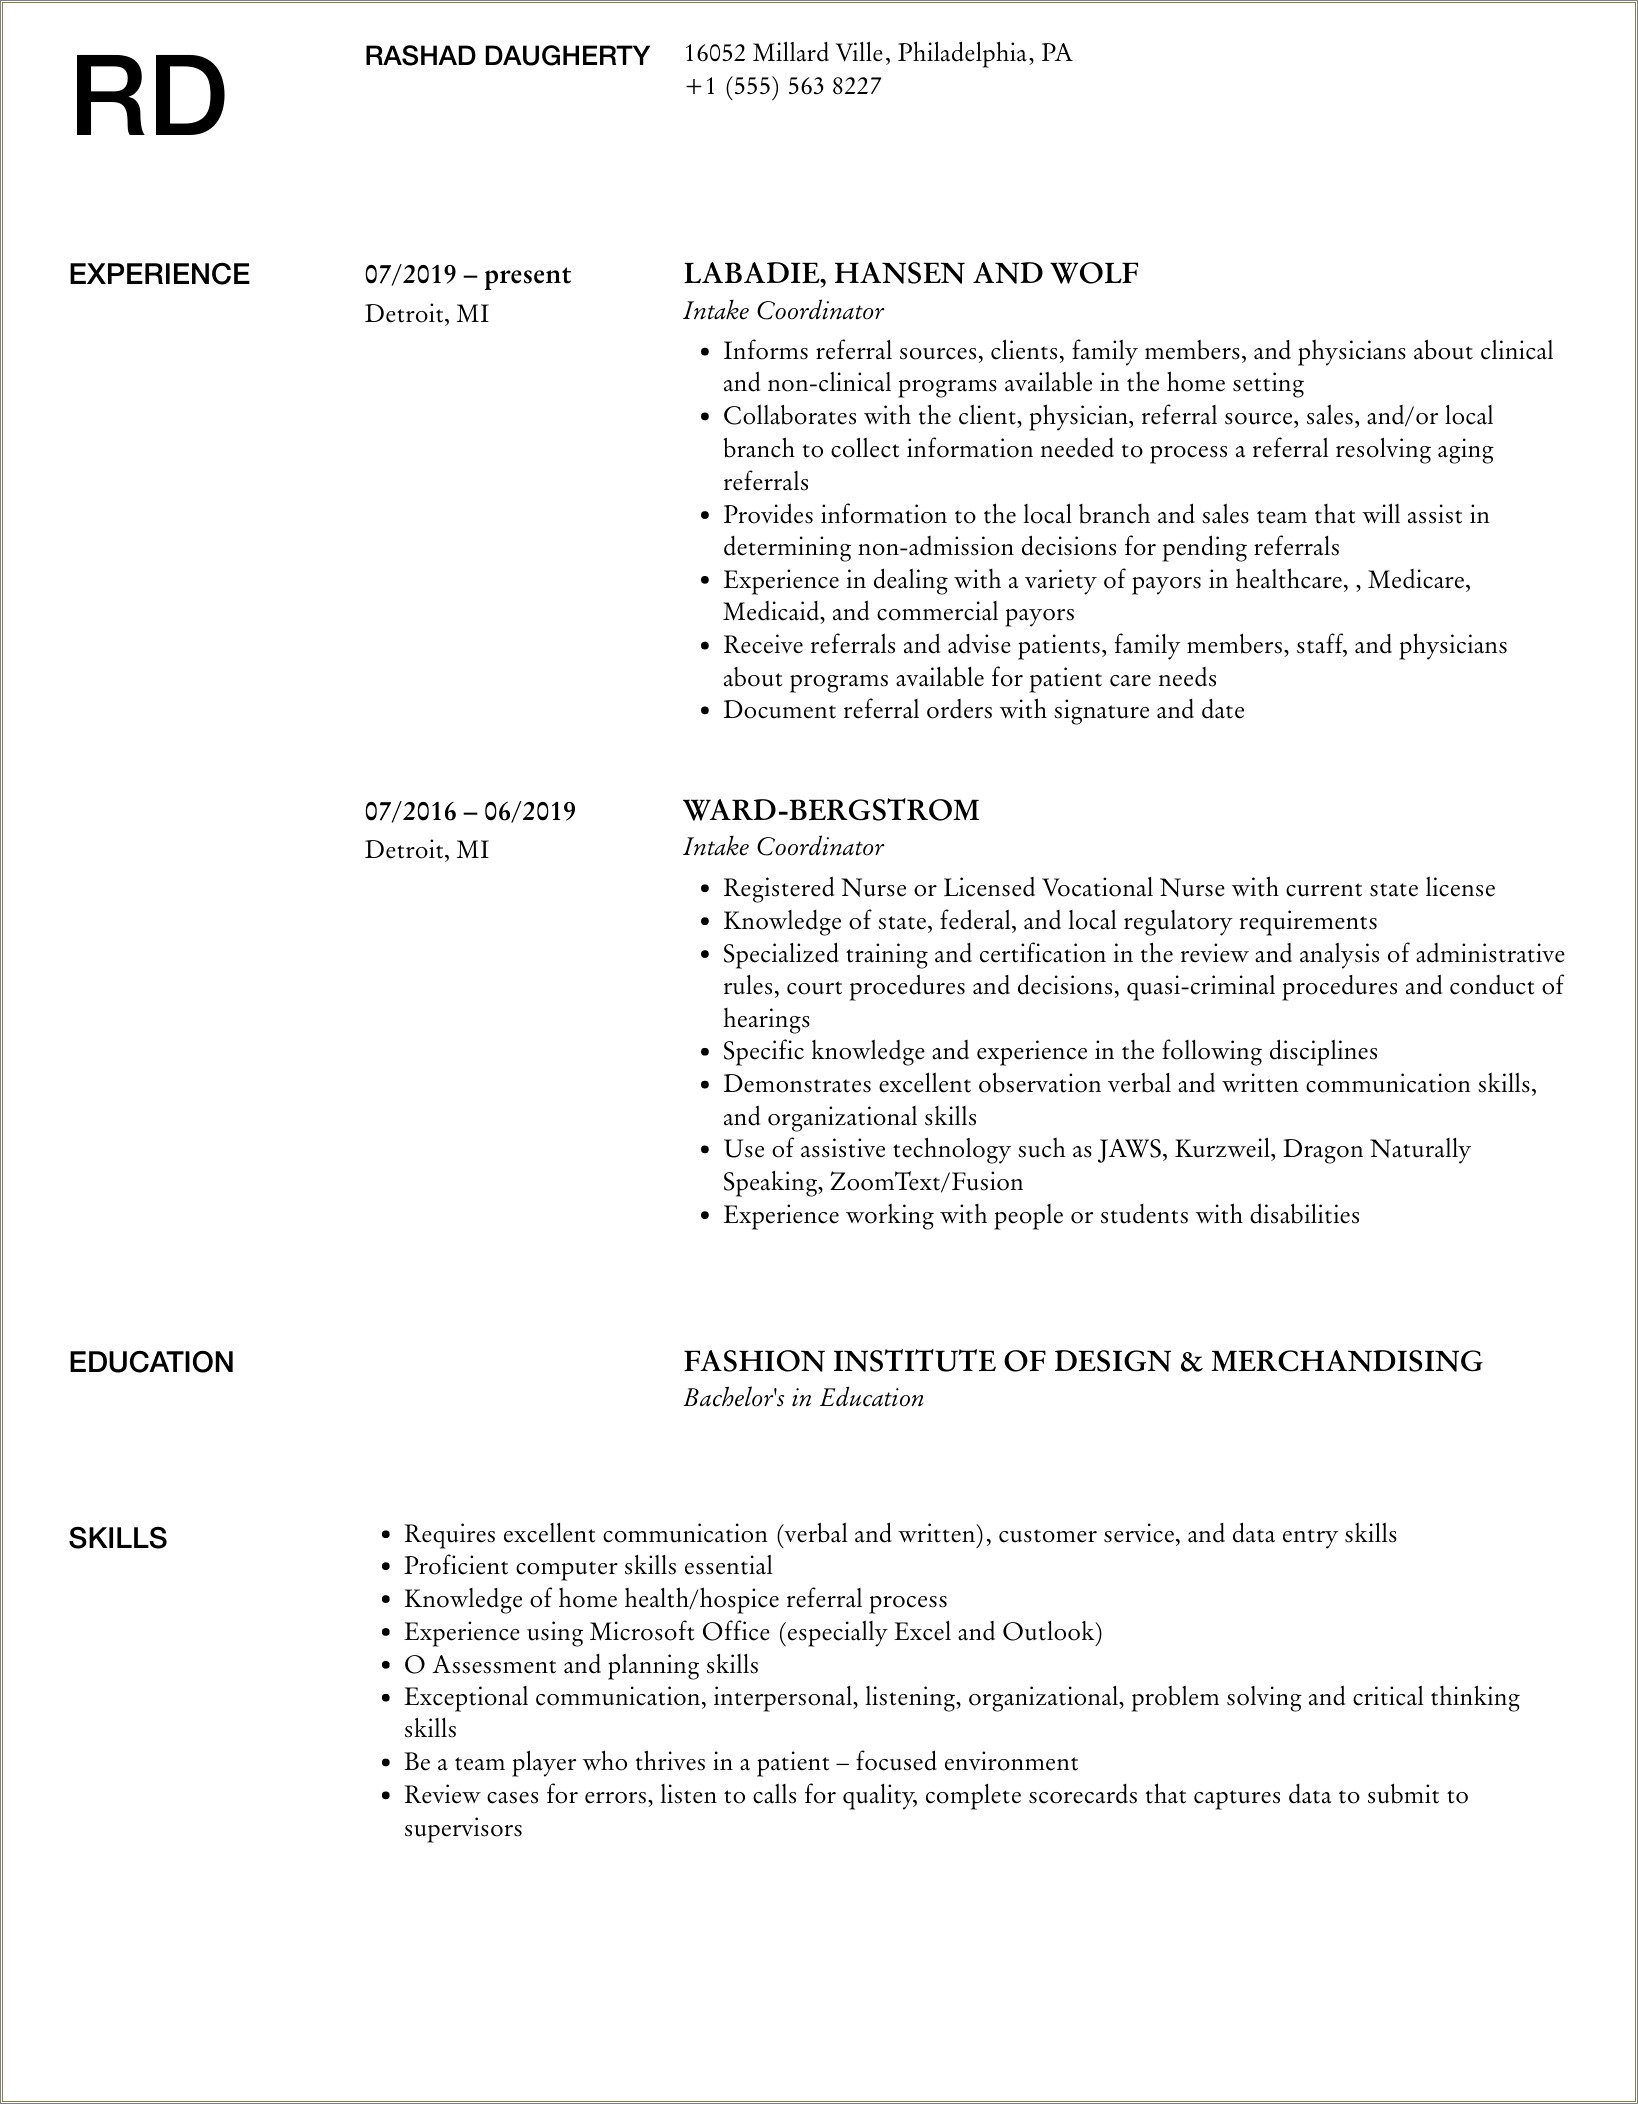 Sample Summary For Legal Intake Coordinator Resume